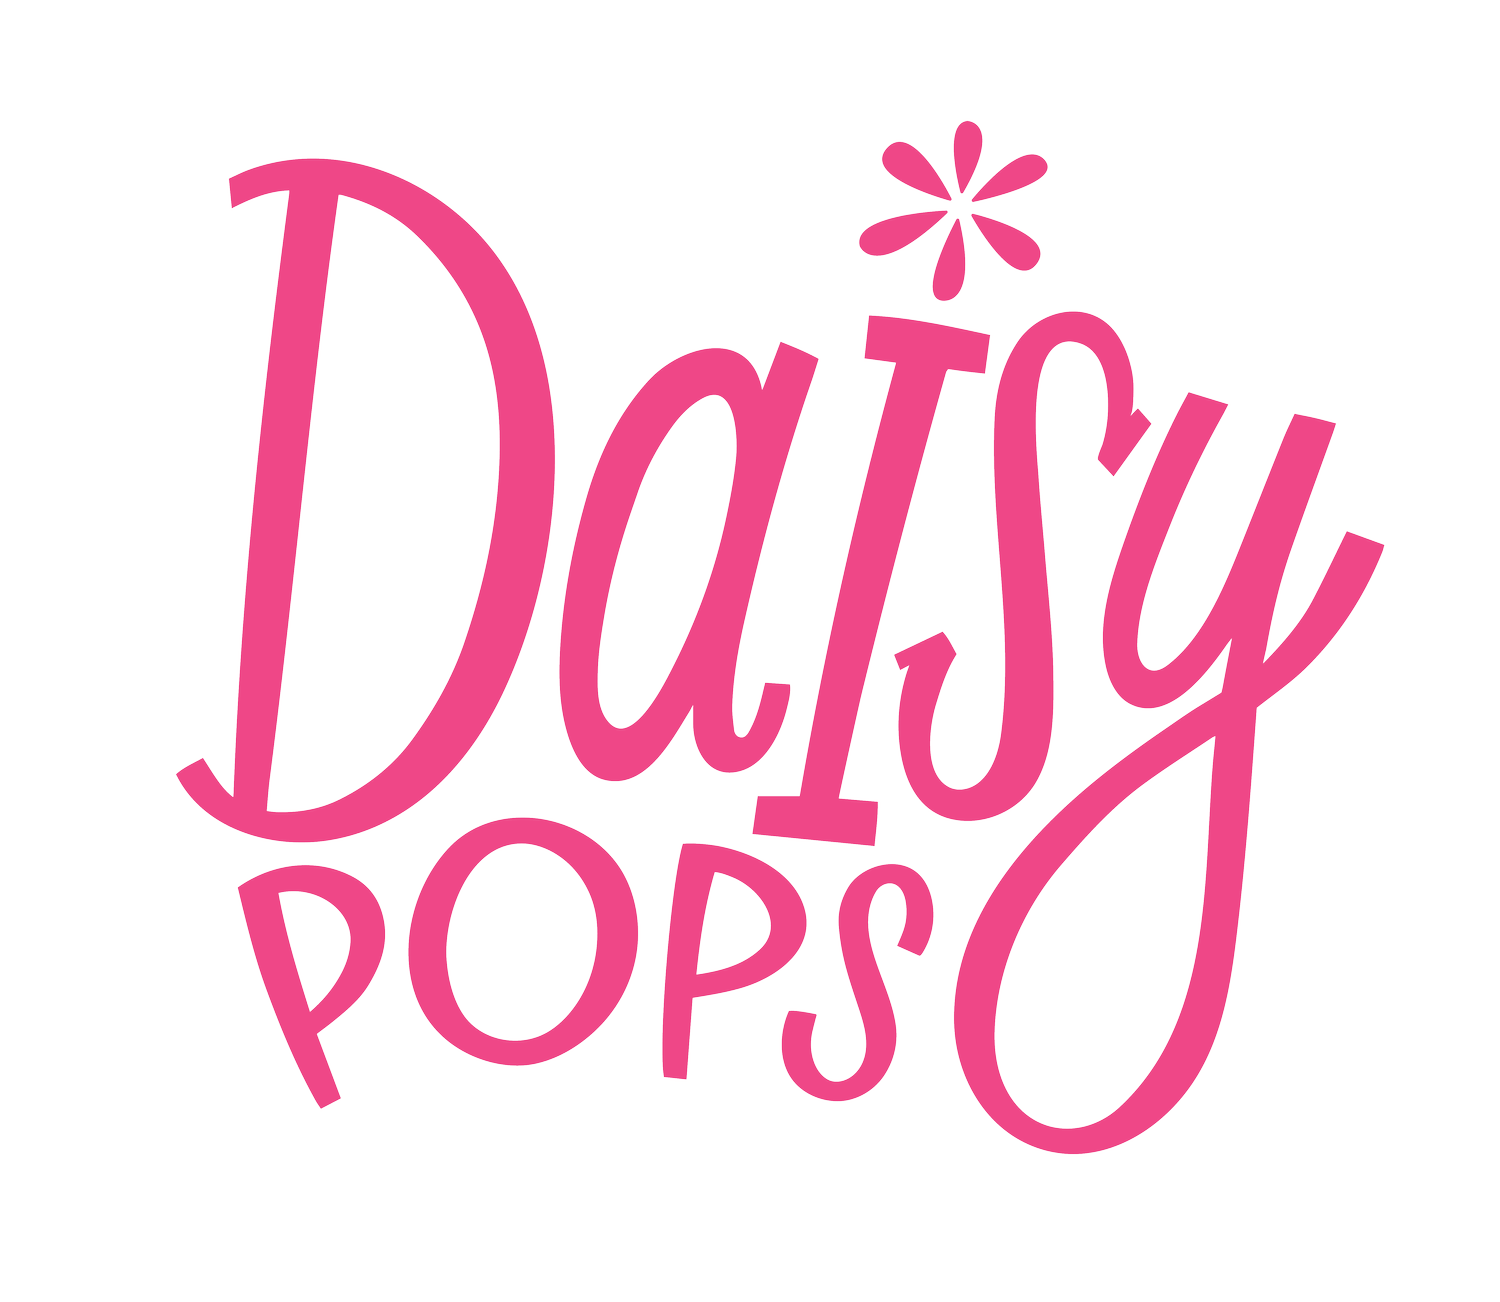 Daisy Pops